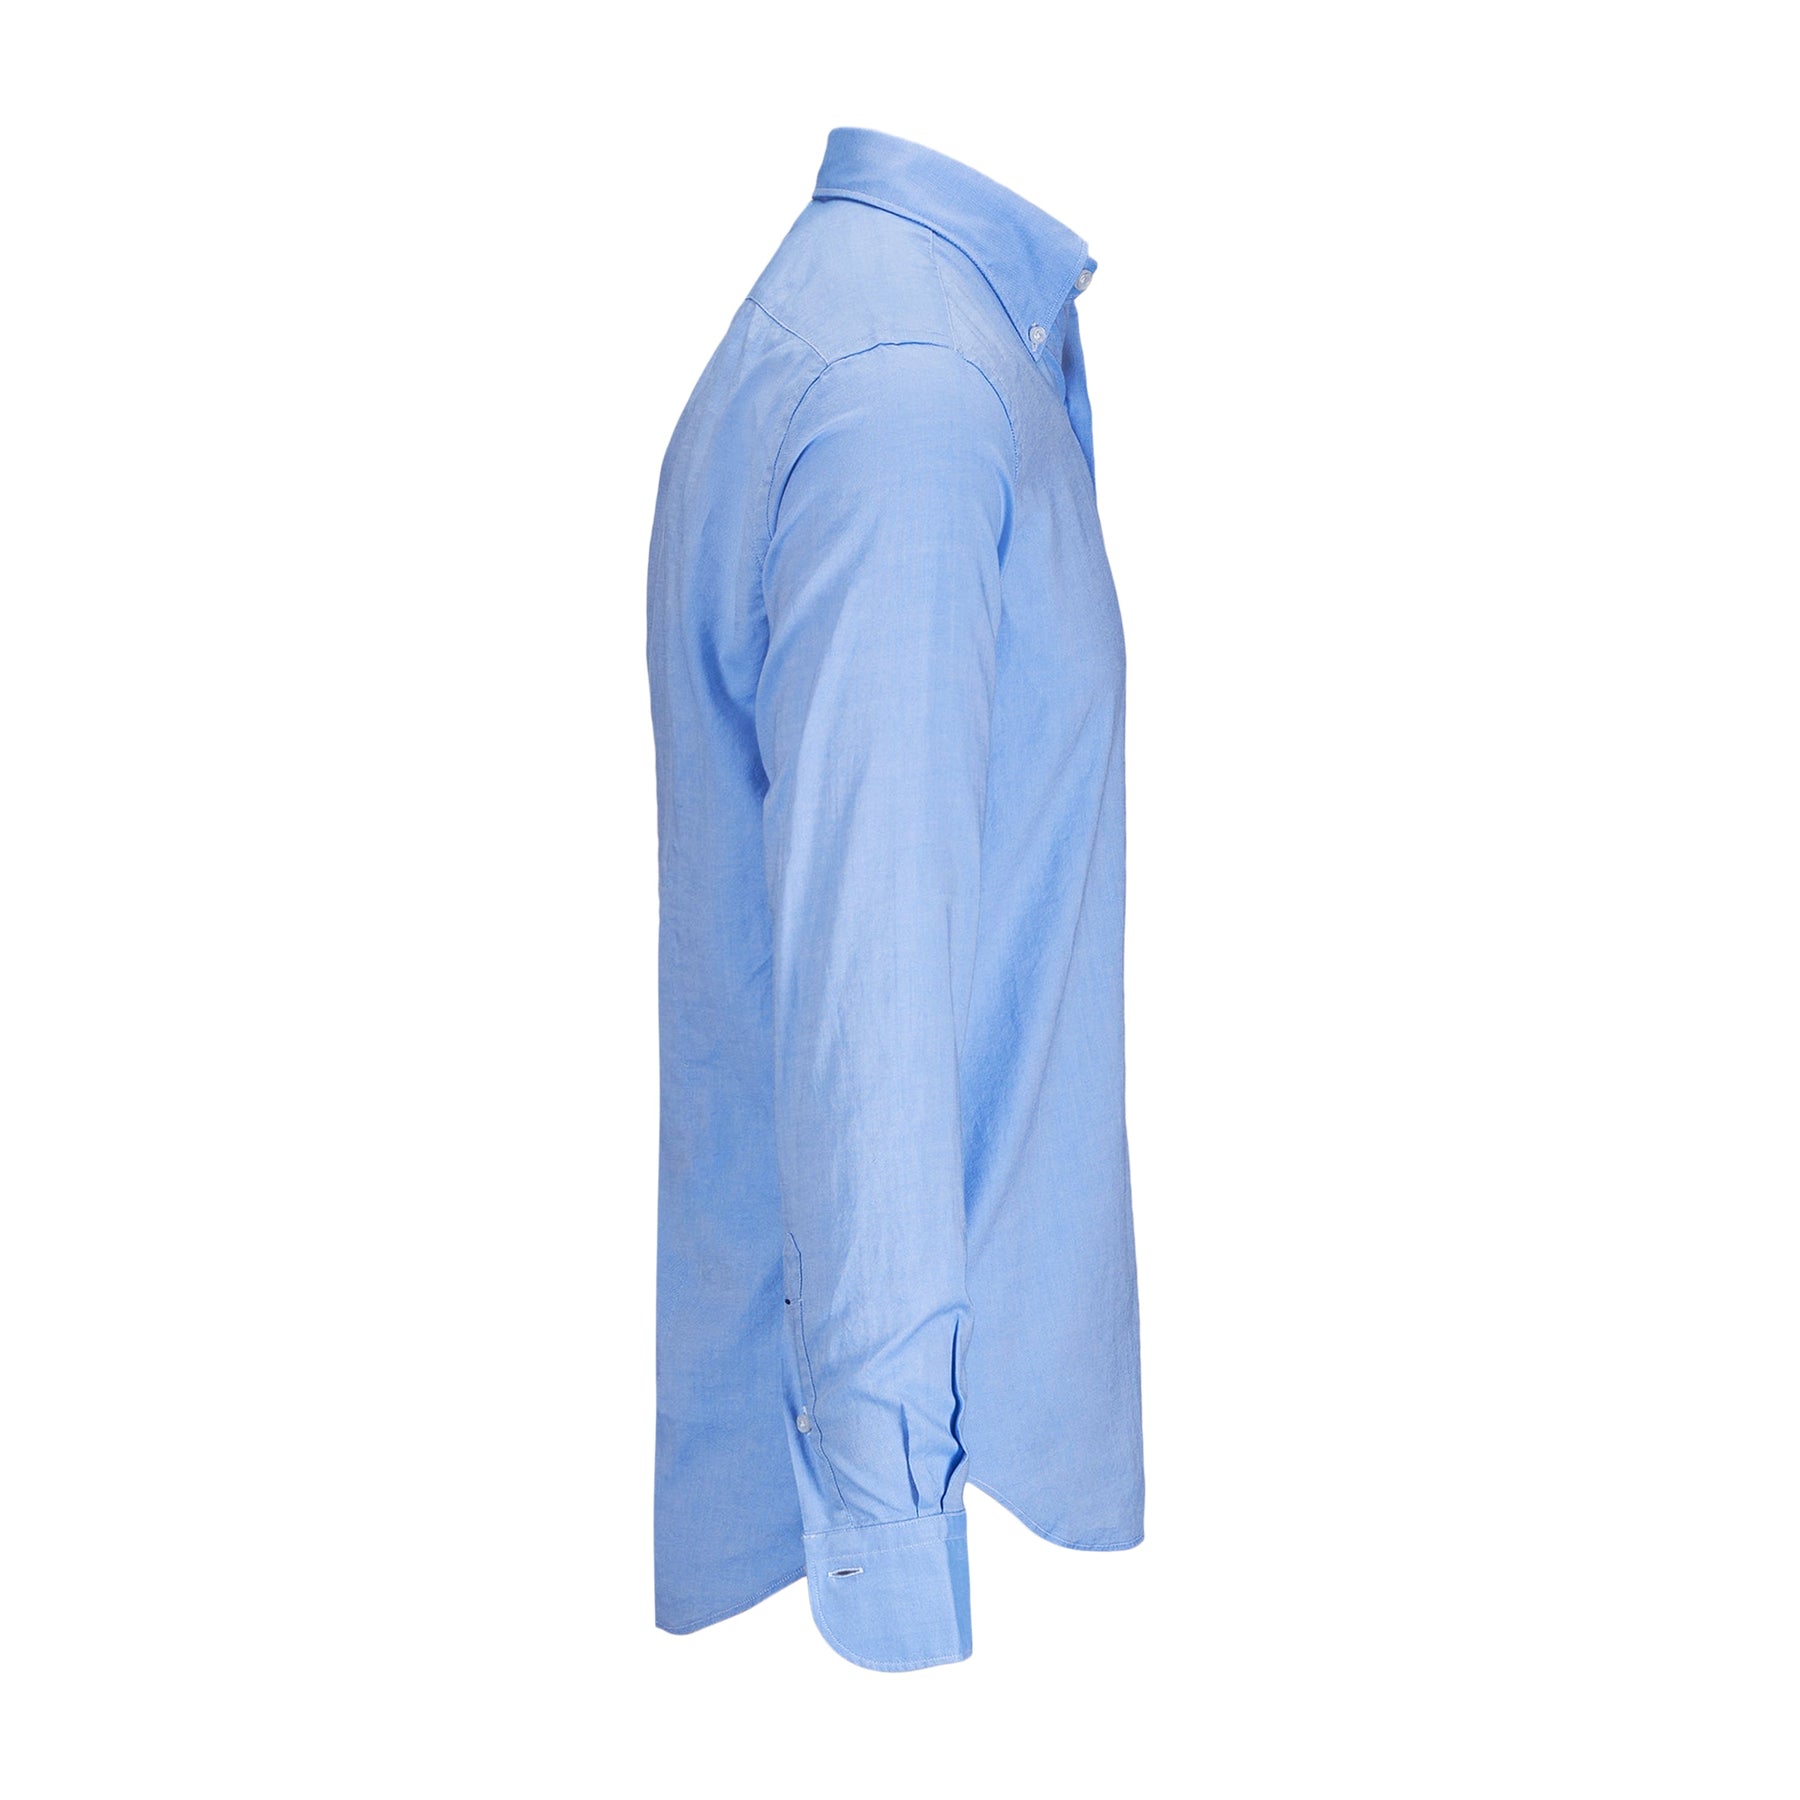 Orian Cotton Button-Down Shirt Blue-Skjorte-Orian-Phrase